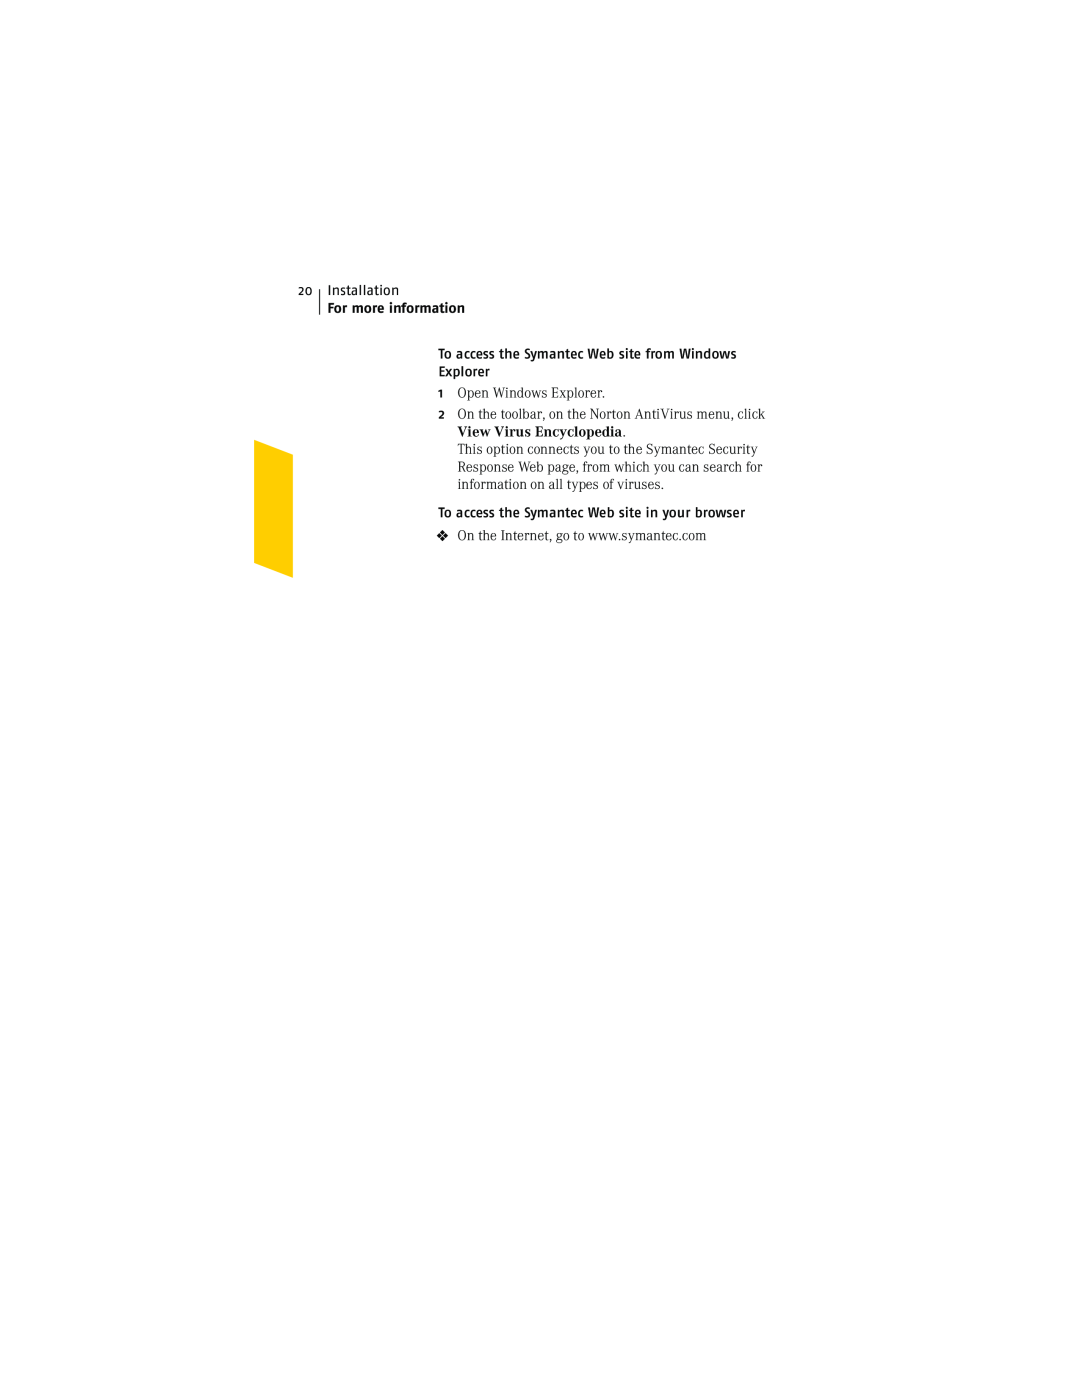 Symantec NIS2005 manual For more information, 1Open Windows Explorer 